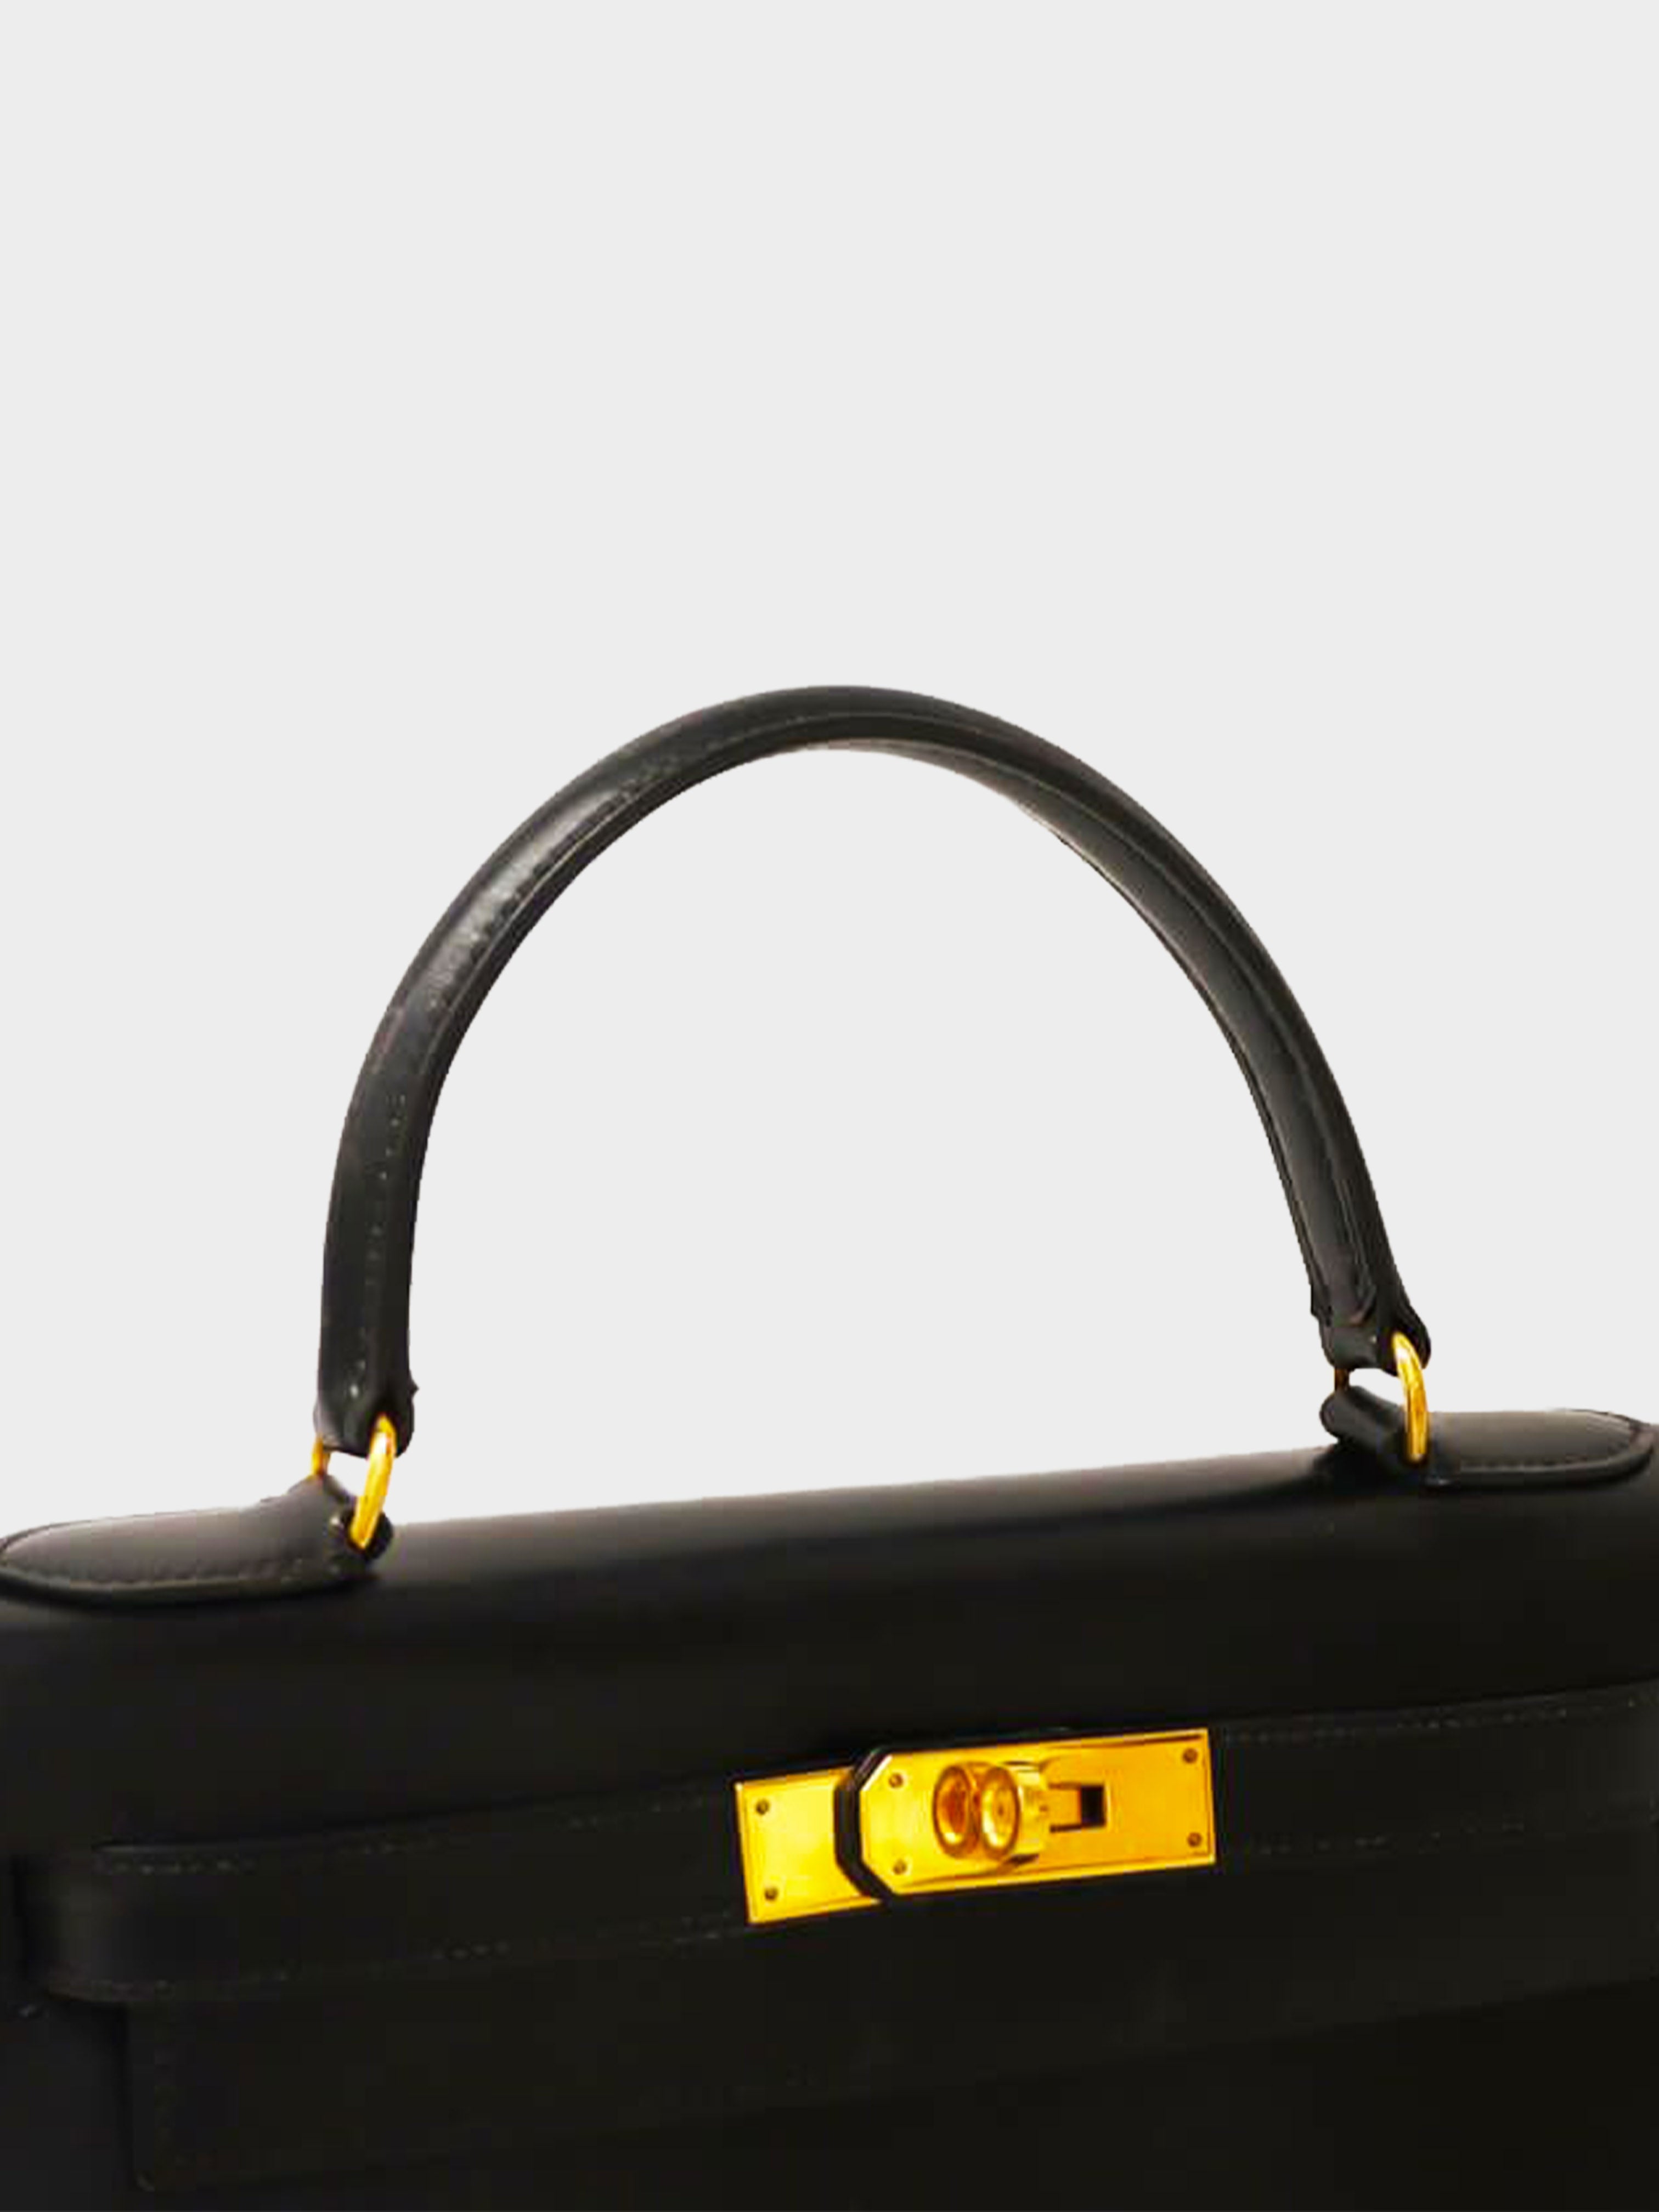 Hermès 1986 Black Kelly 28 Hand Bag · INTO